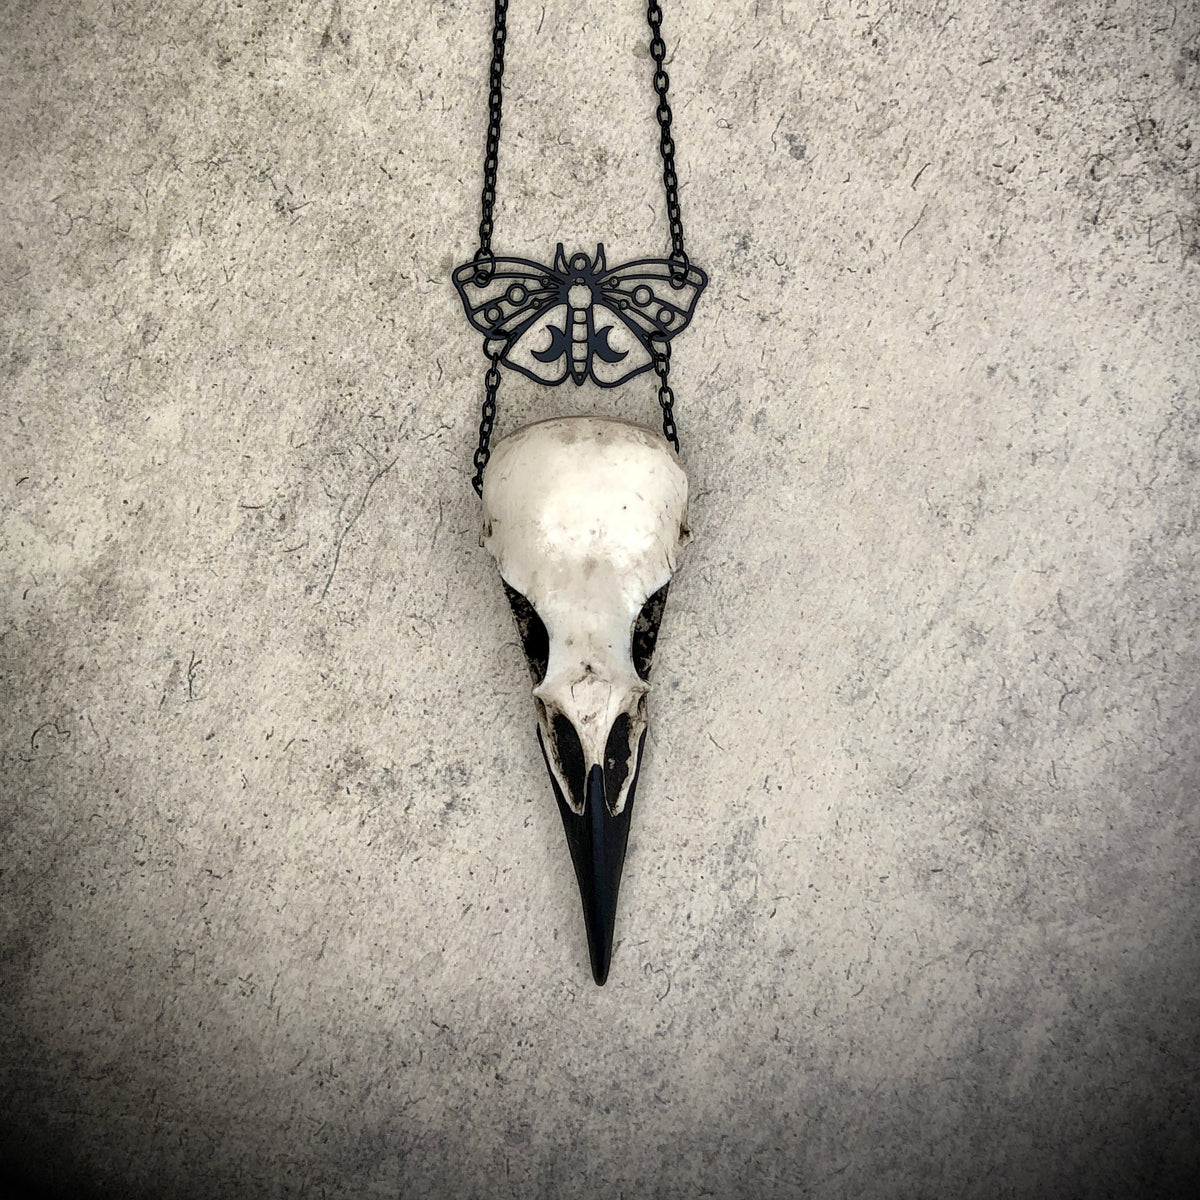 Gothic black death moth luna butterfly charm pendant and bone jewelry mini raven skull dangle pendant by artist making resin bird skulls.